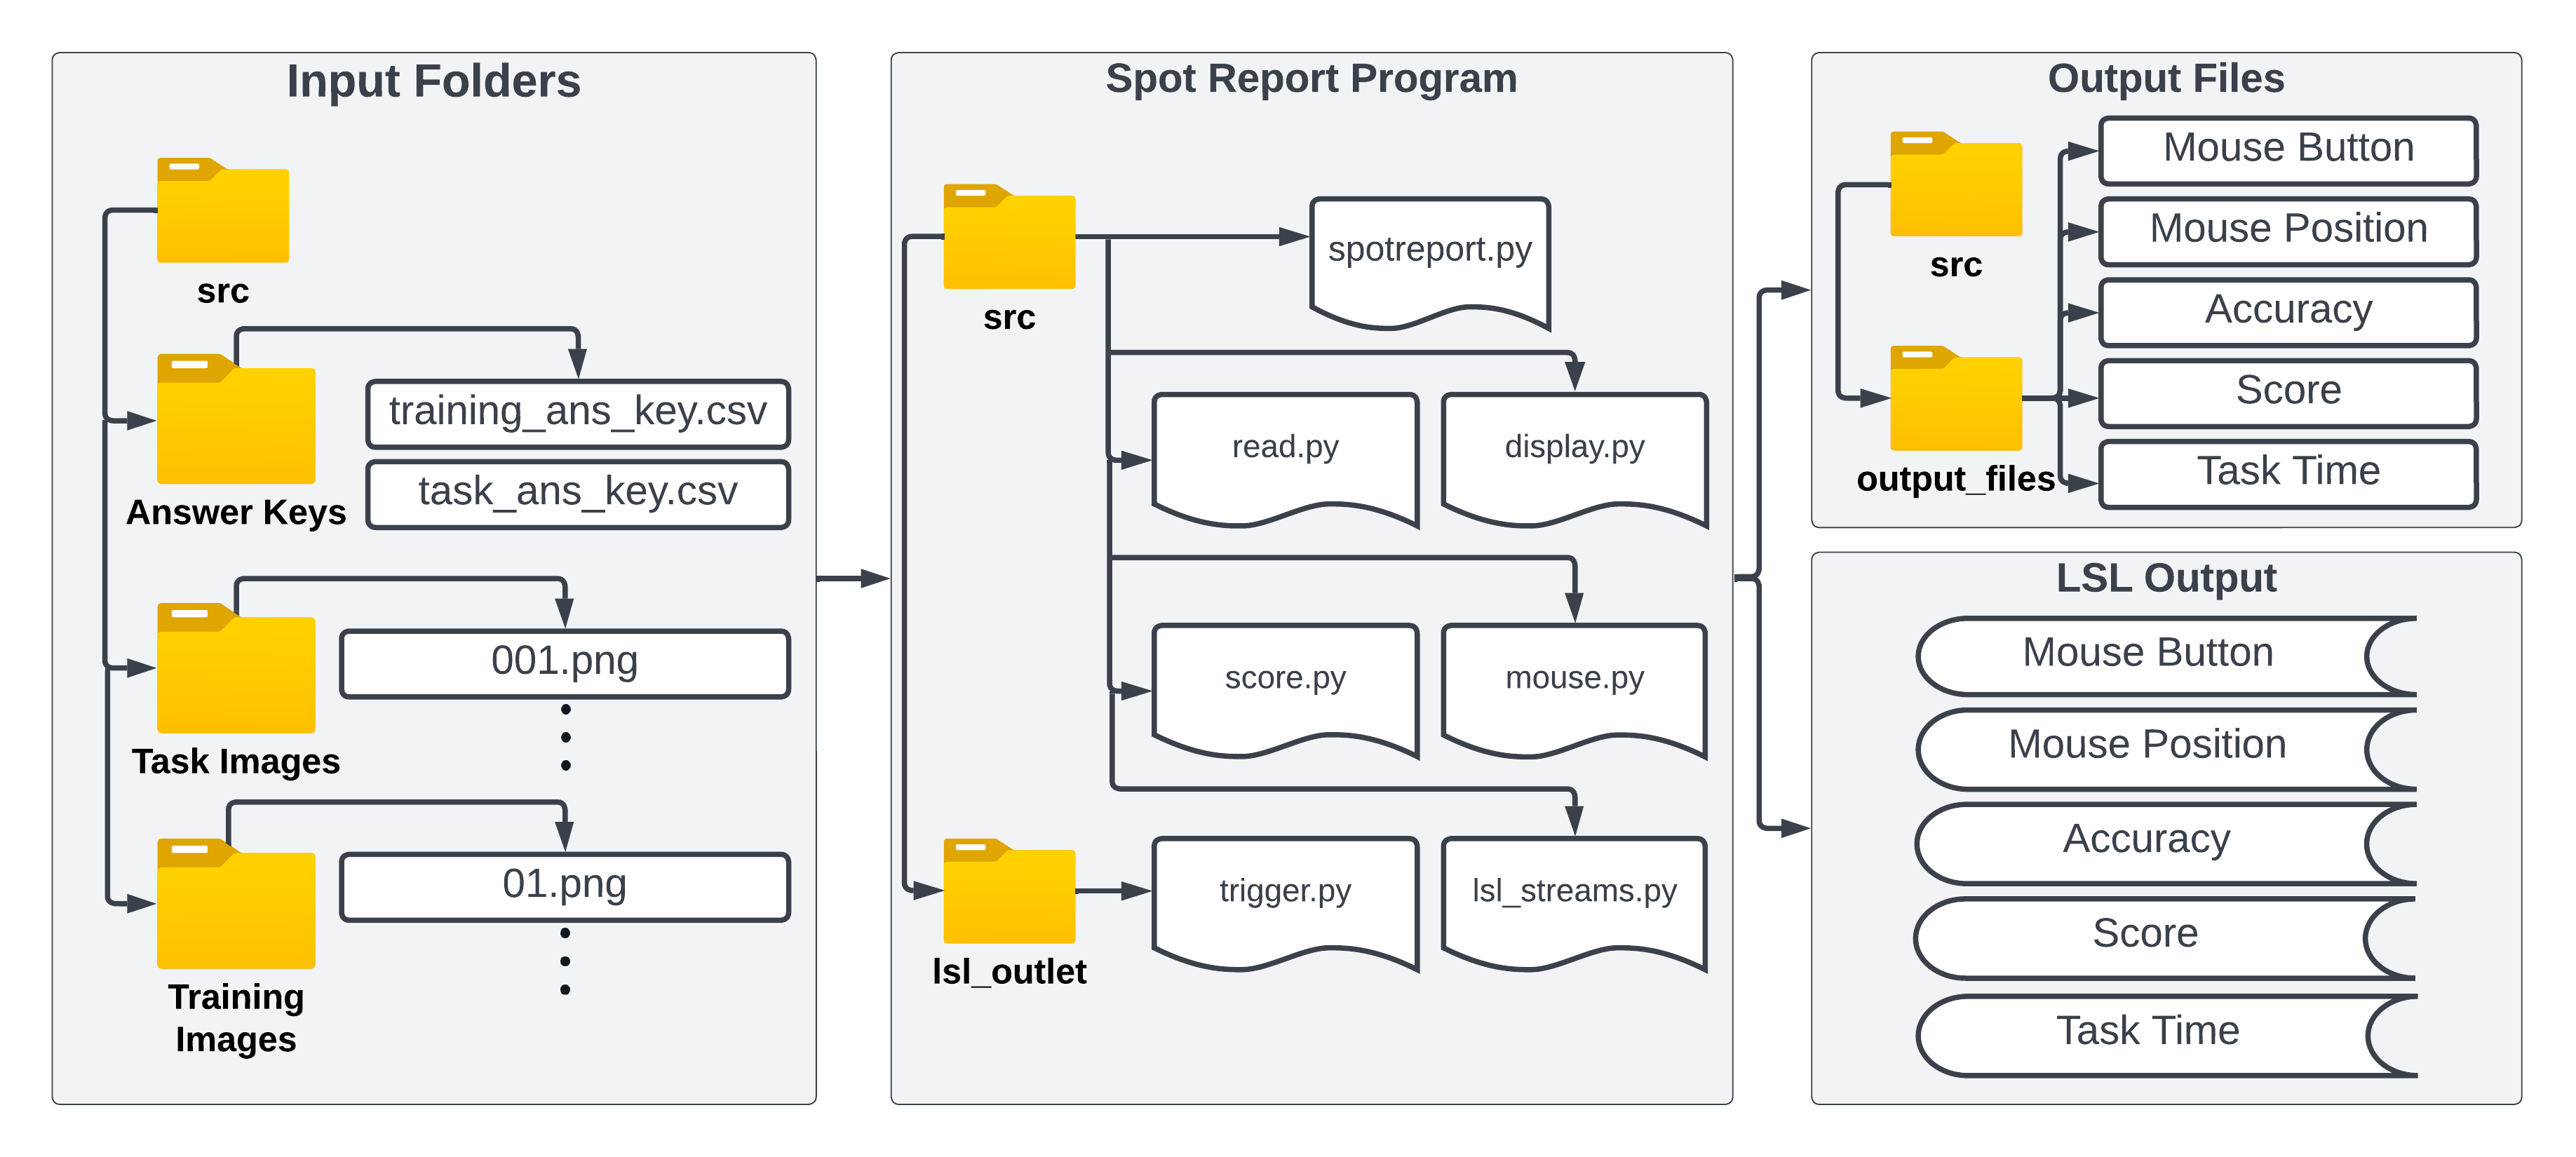 File strucutre of the spot report program